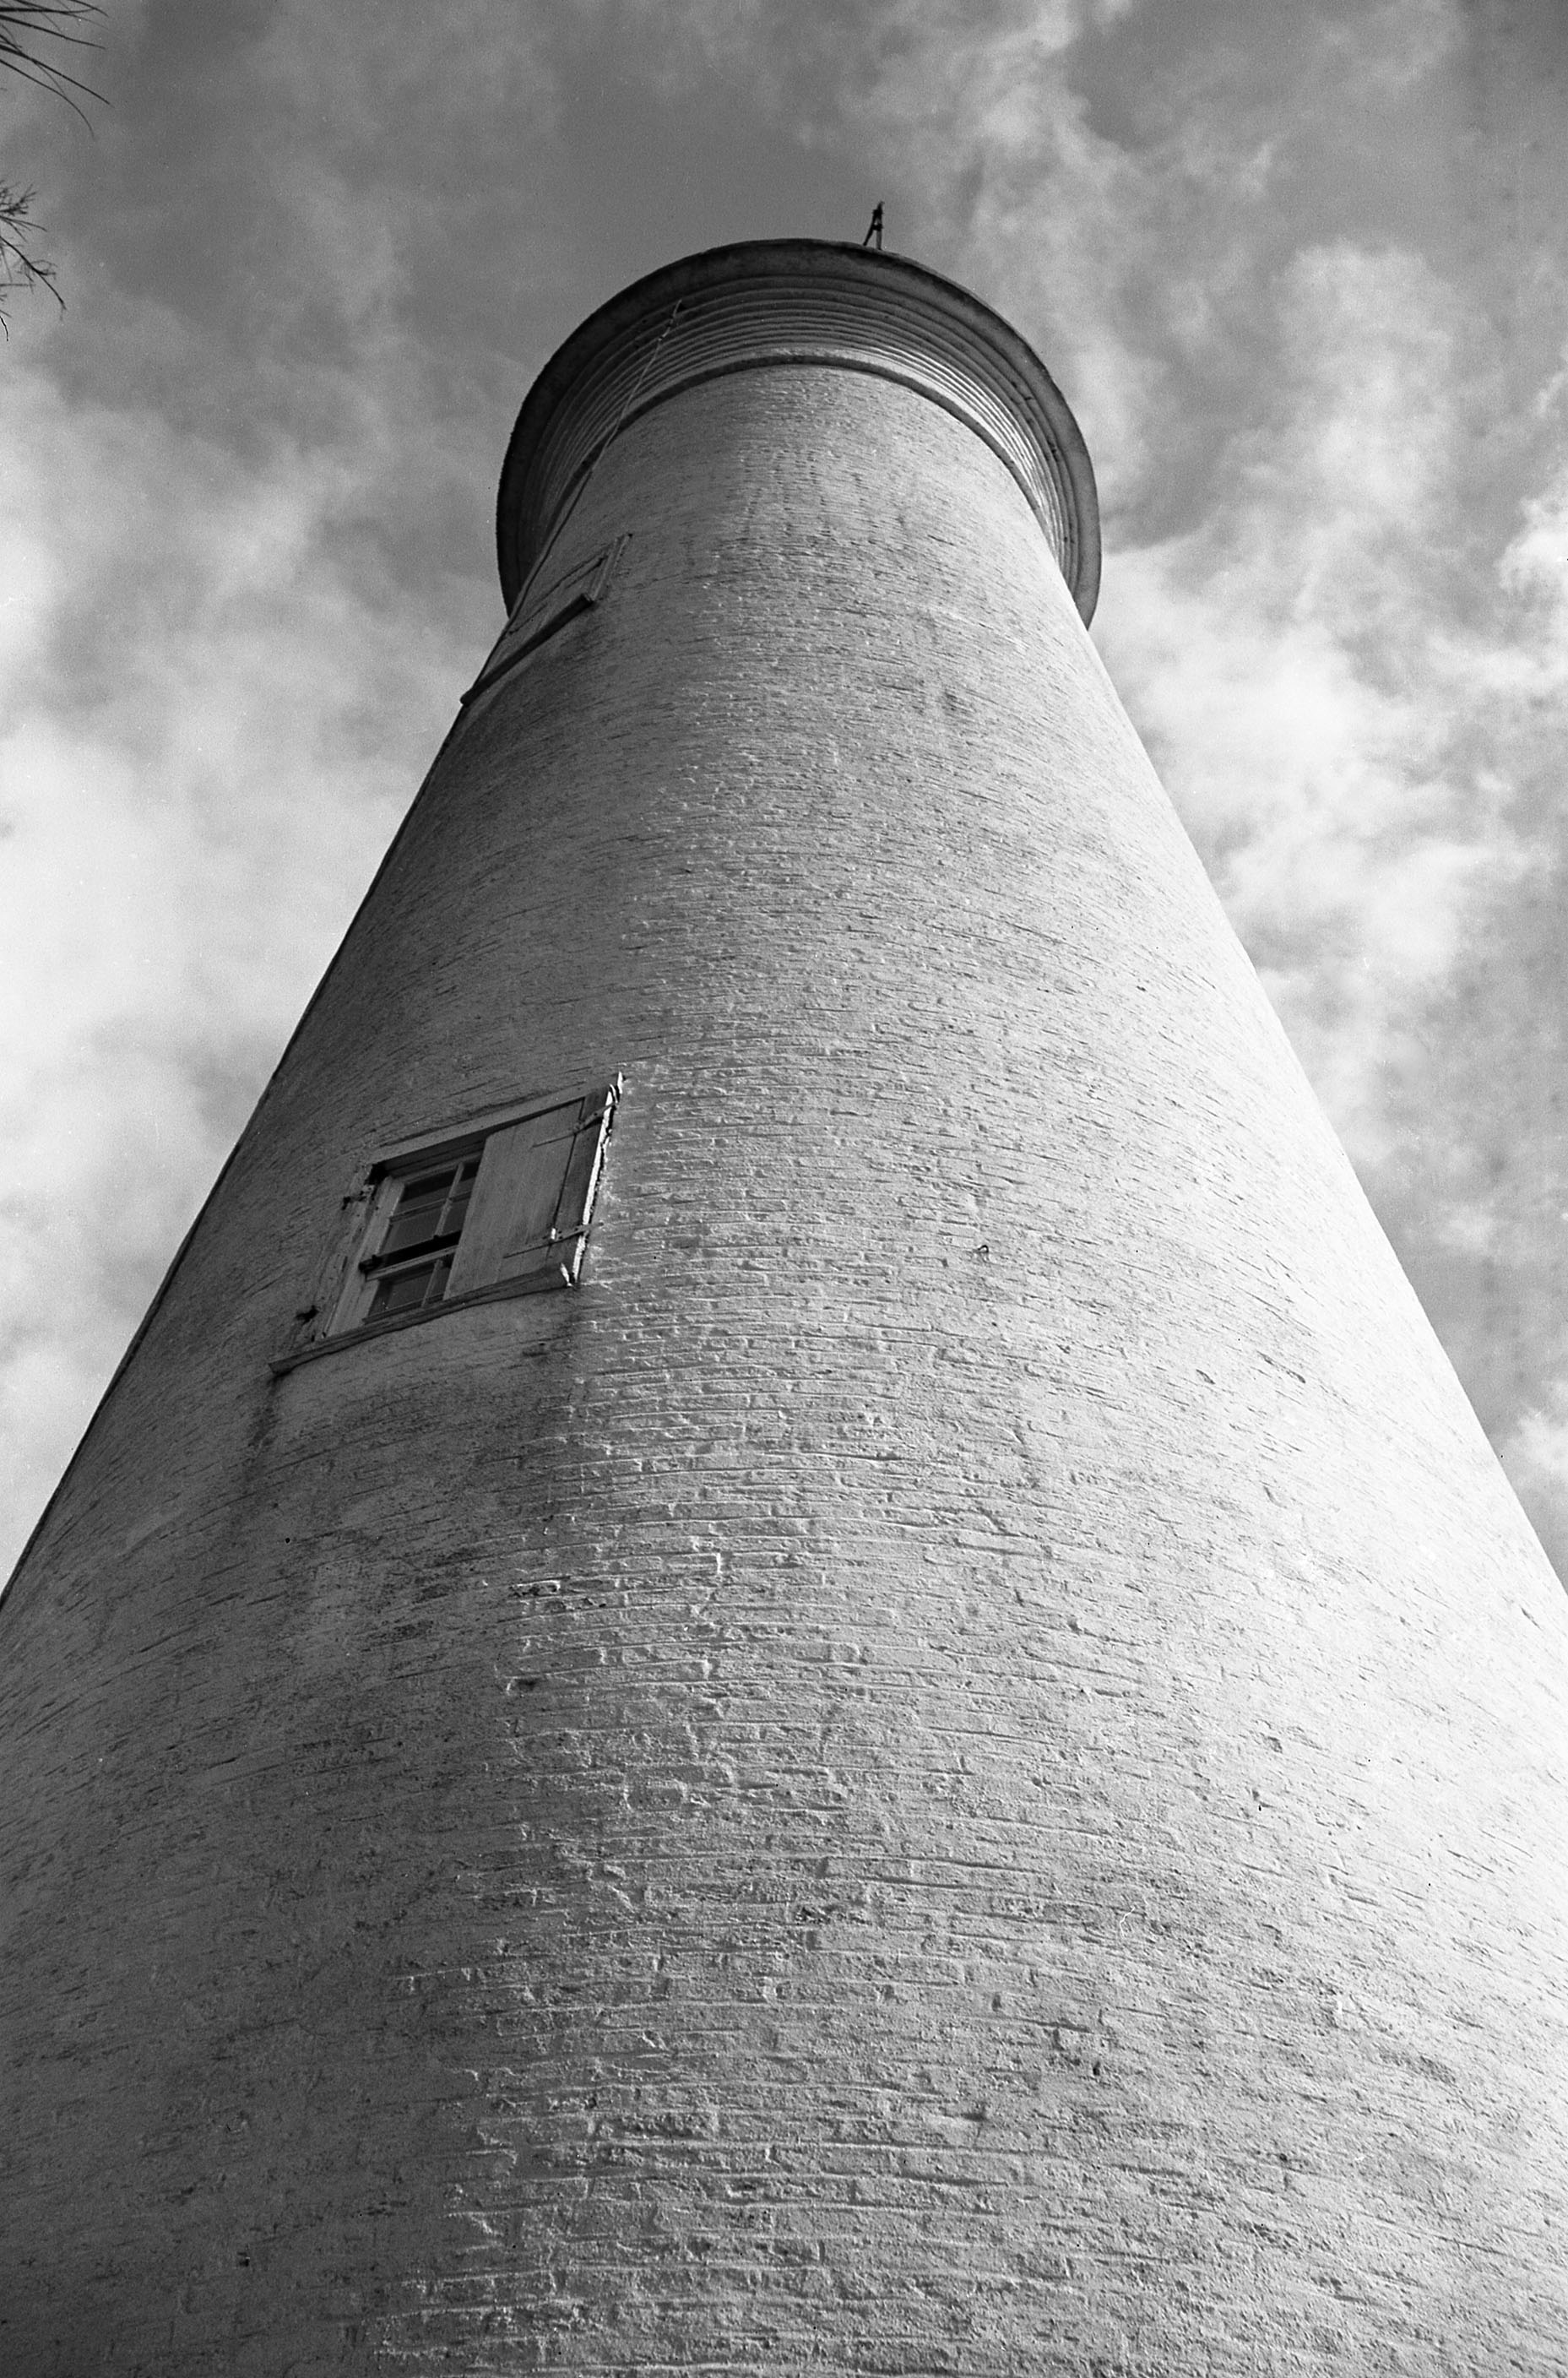 St. Marks Lighthouse